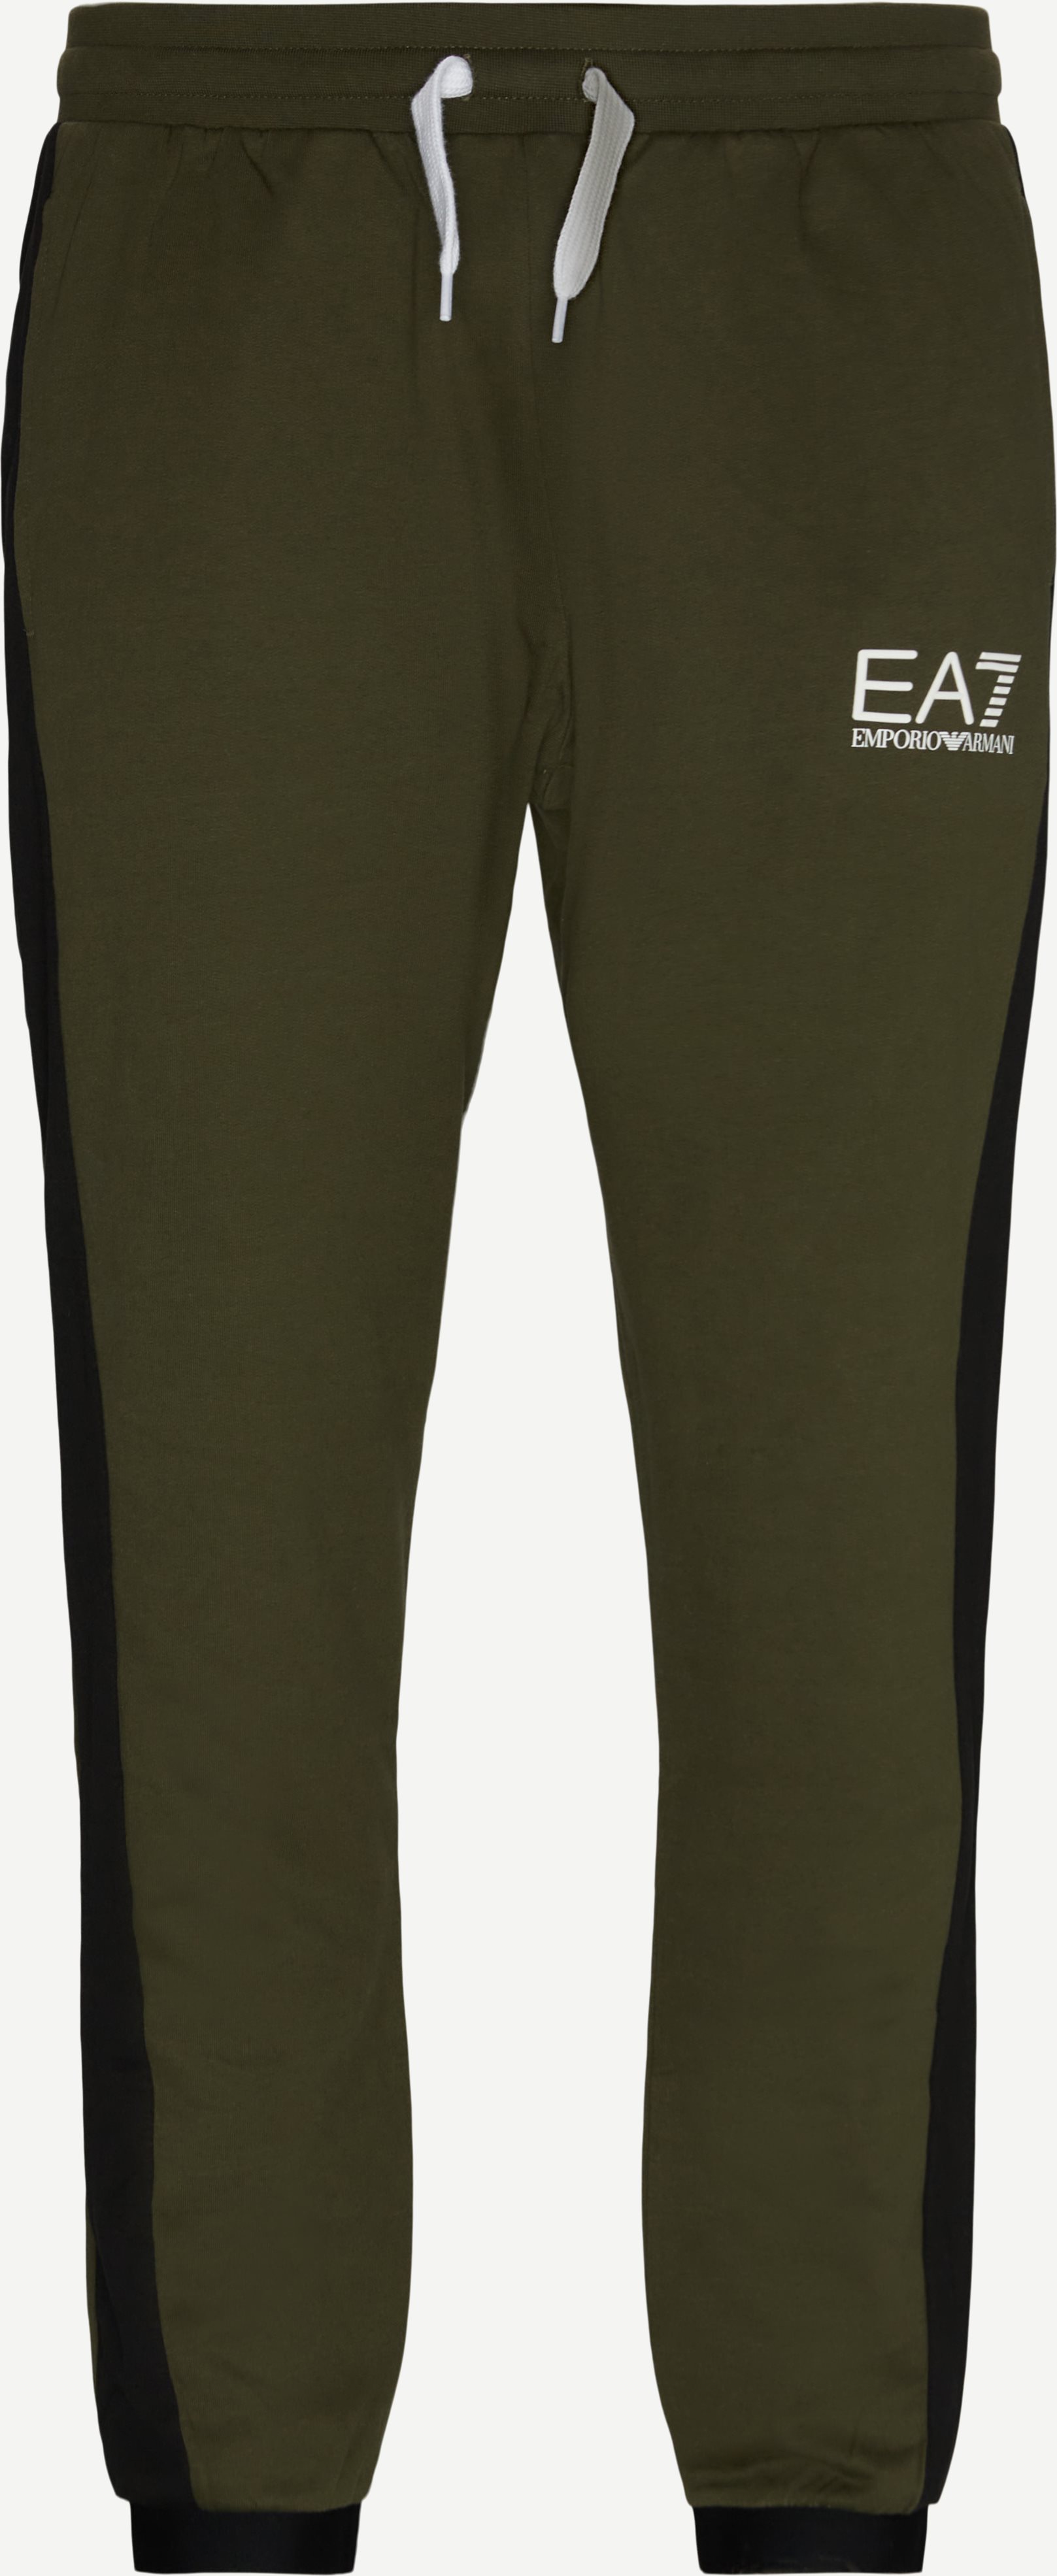 6KPV64 Sweatpants - Trousers - Regular fit - Army